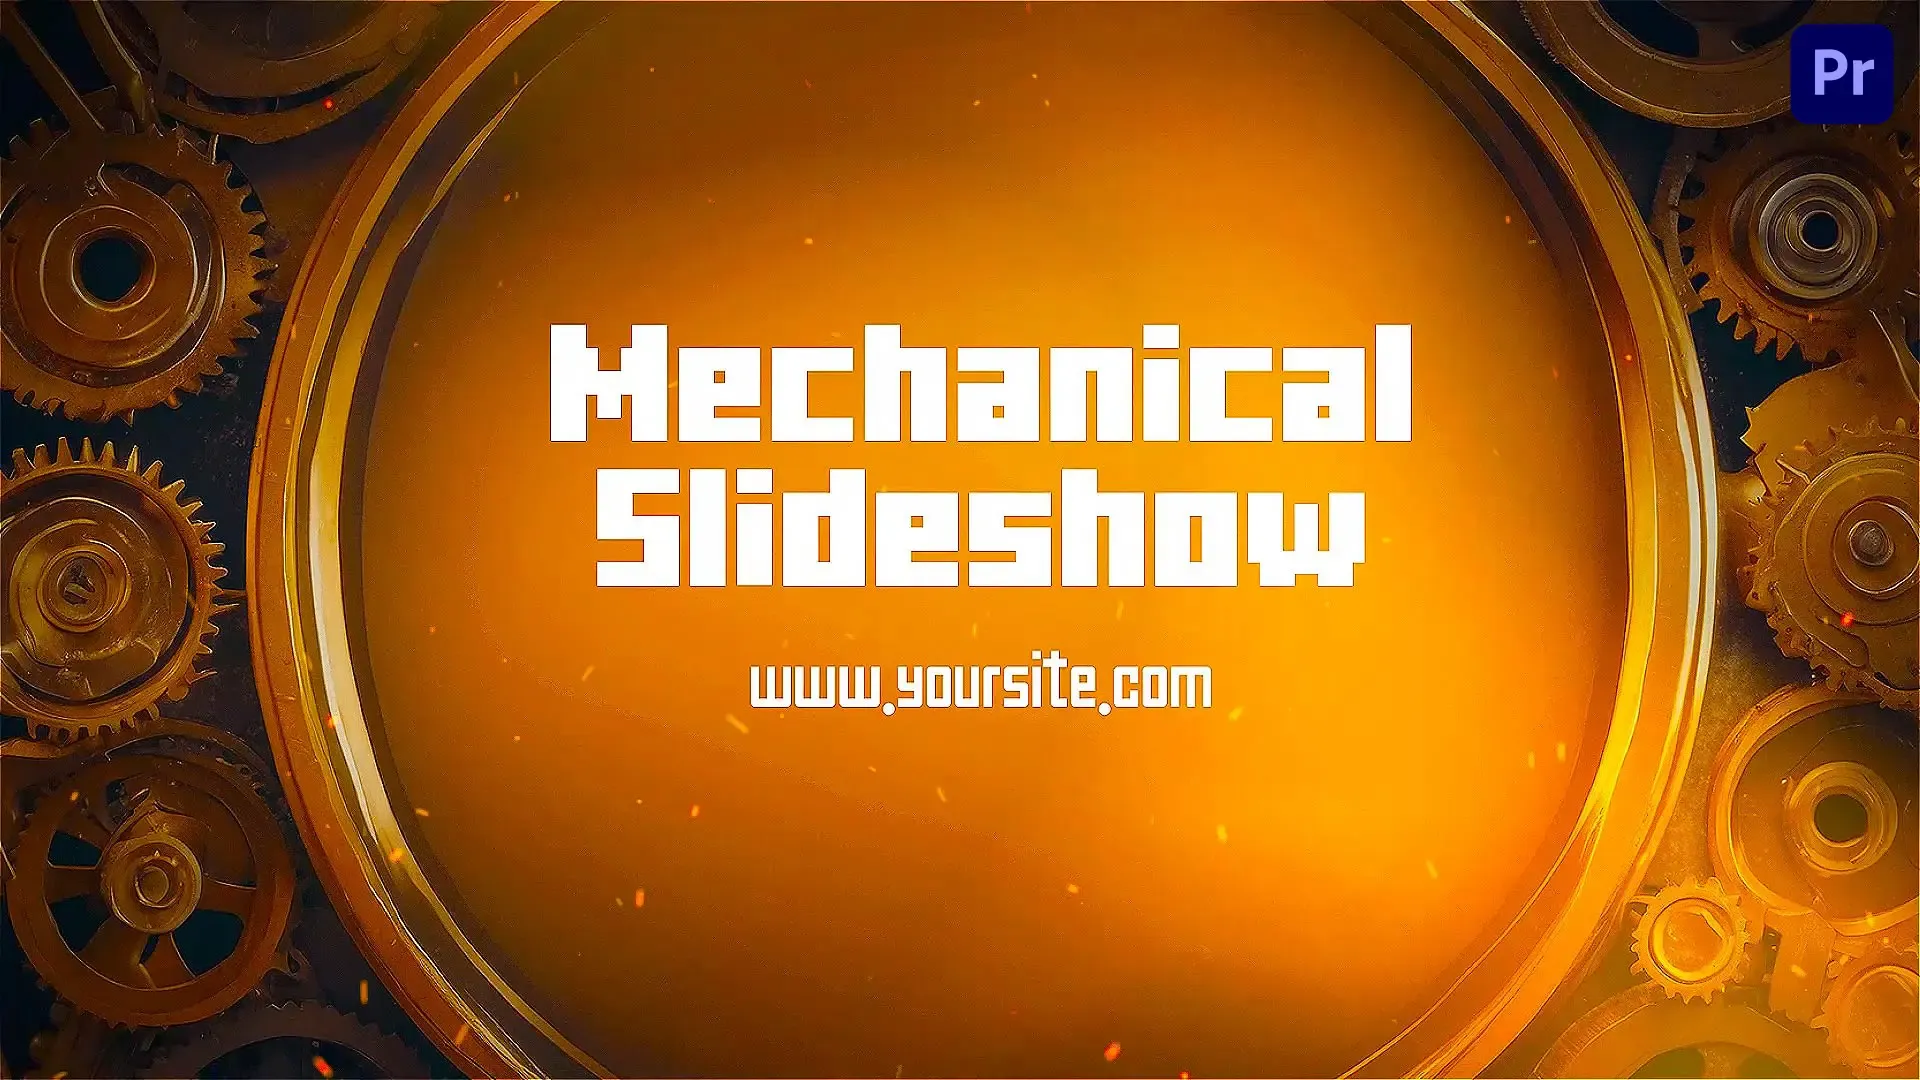 Mechanical Intro 3D Slideshow